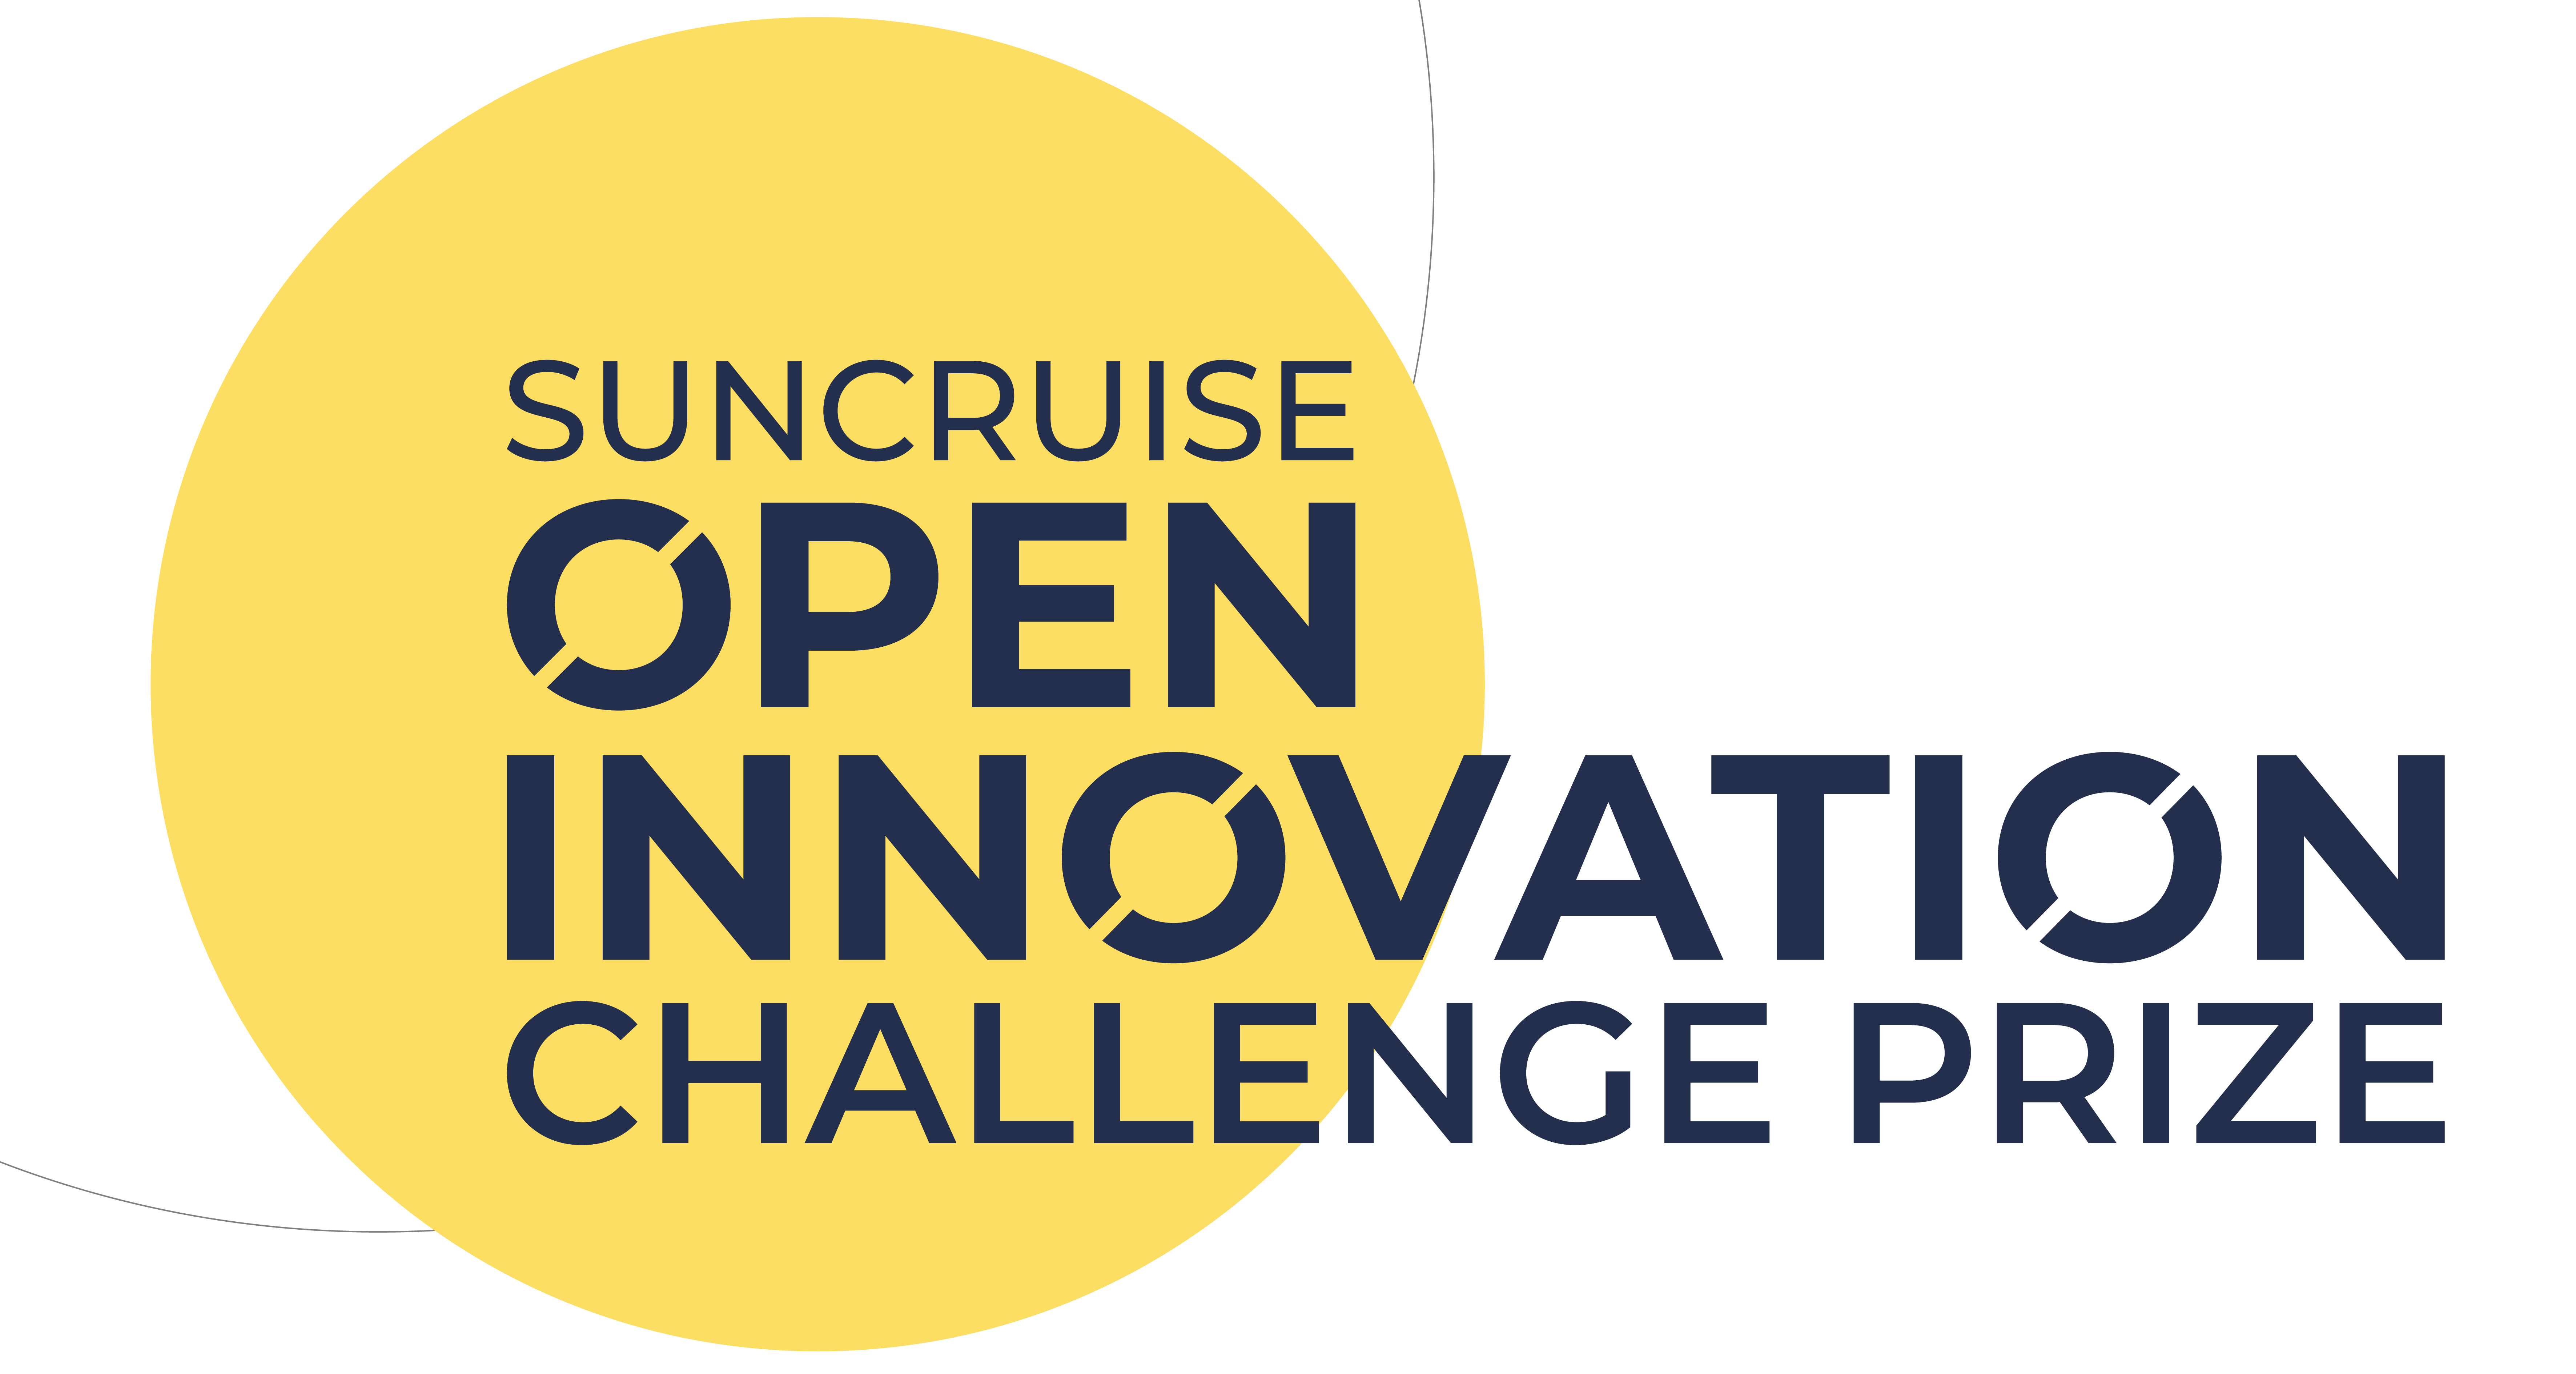 Suncruise Open Innovation Challenge Prize